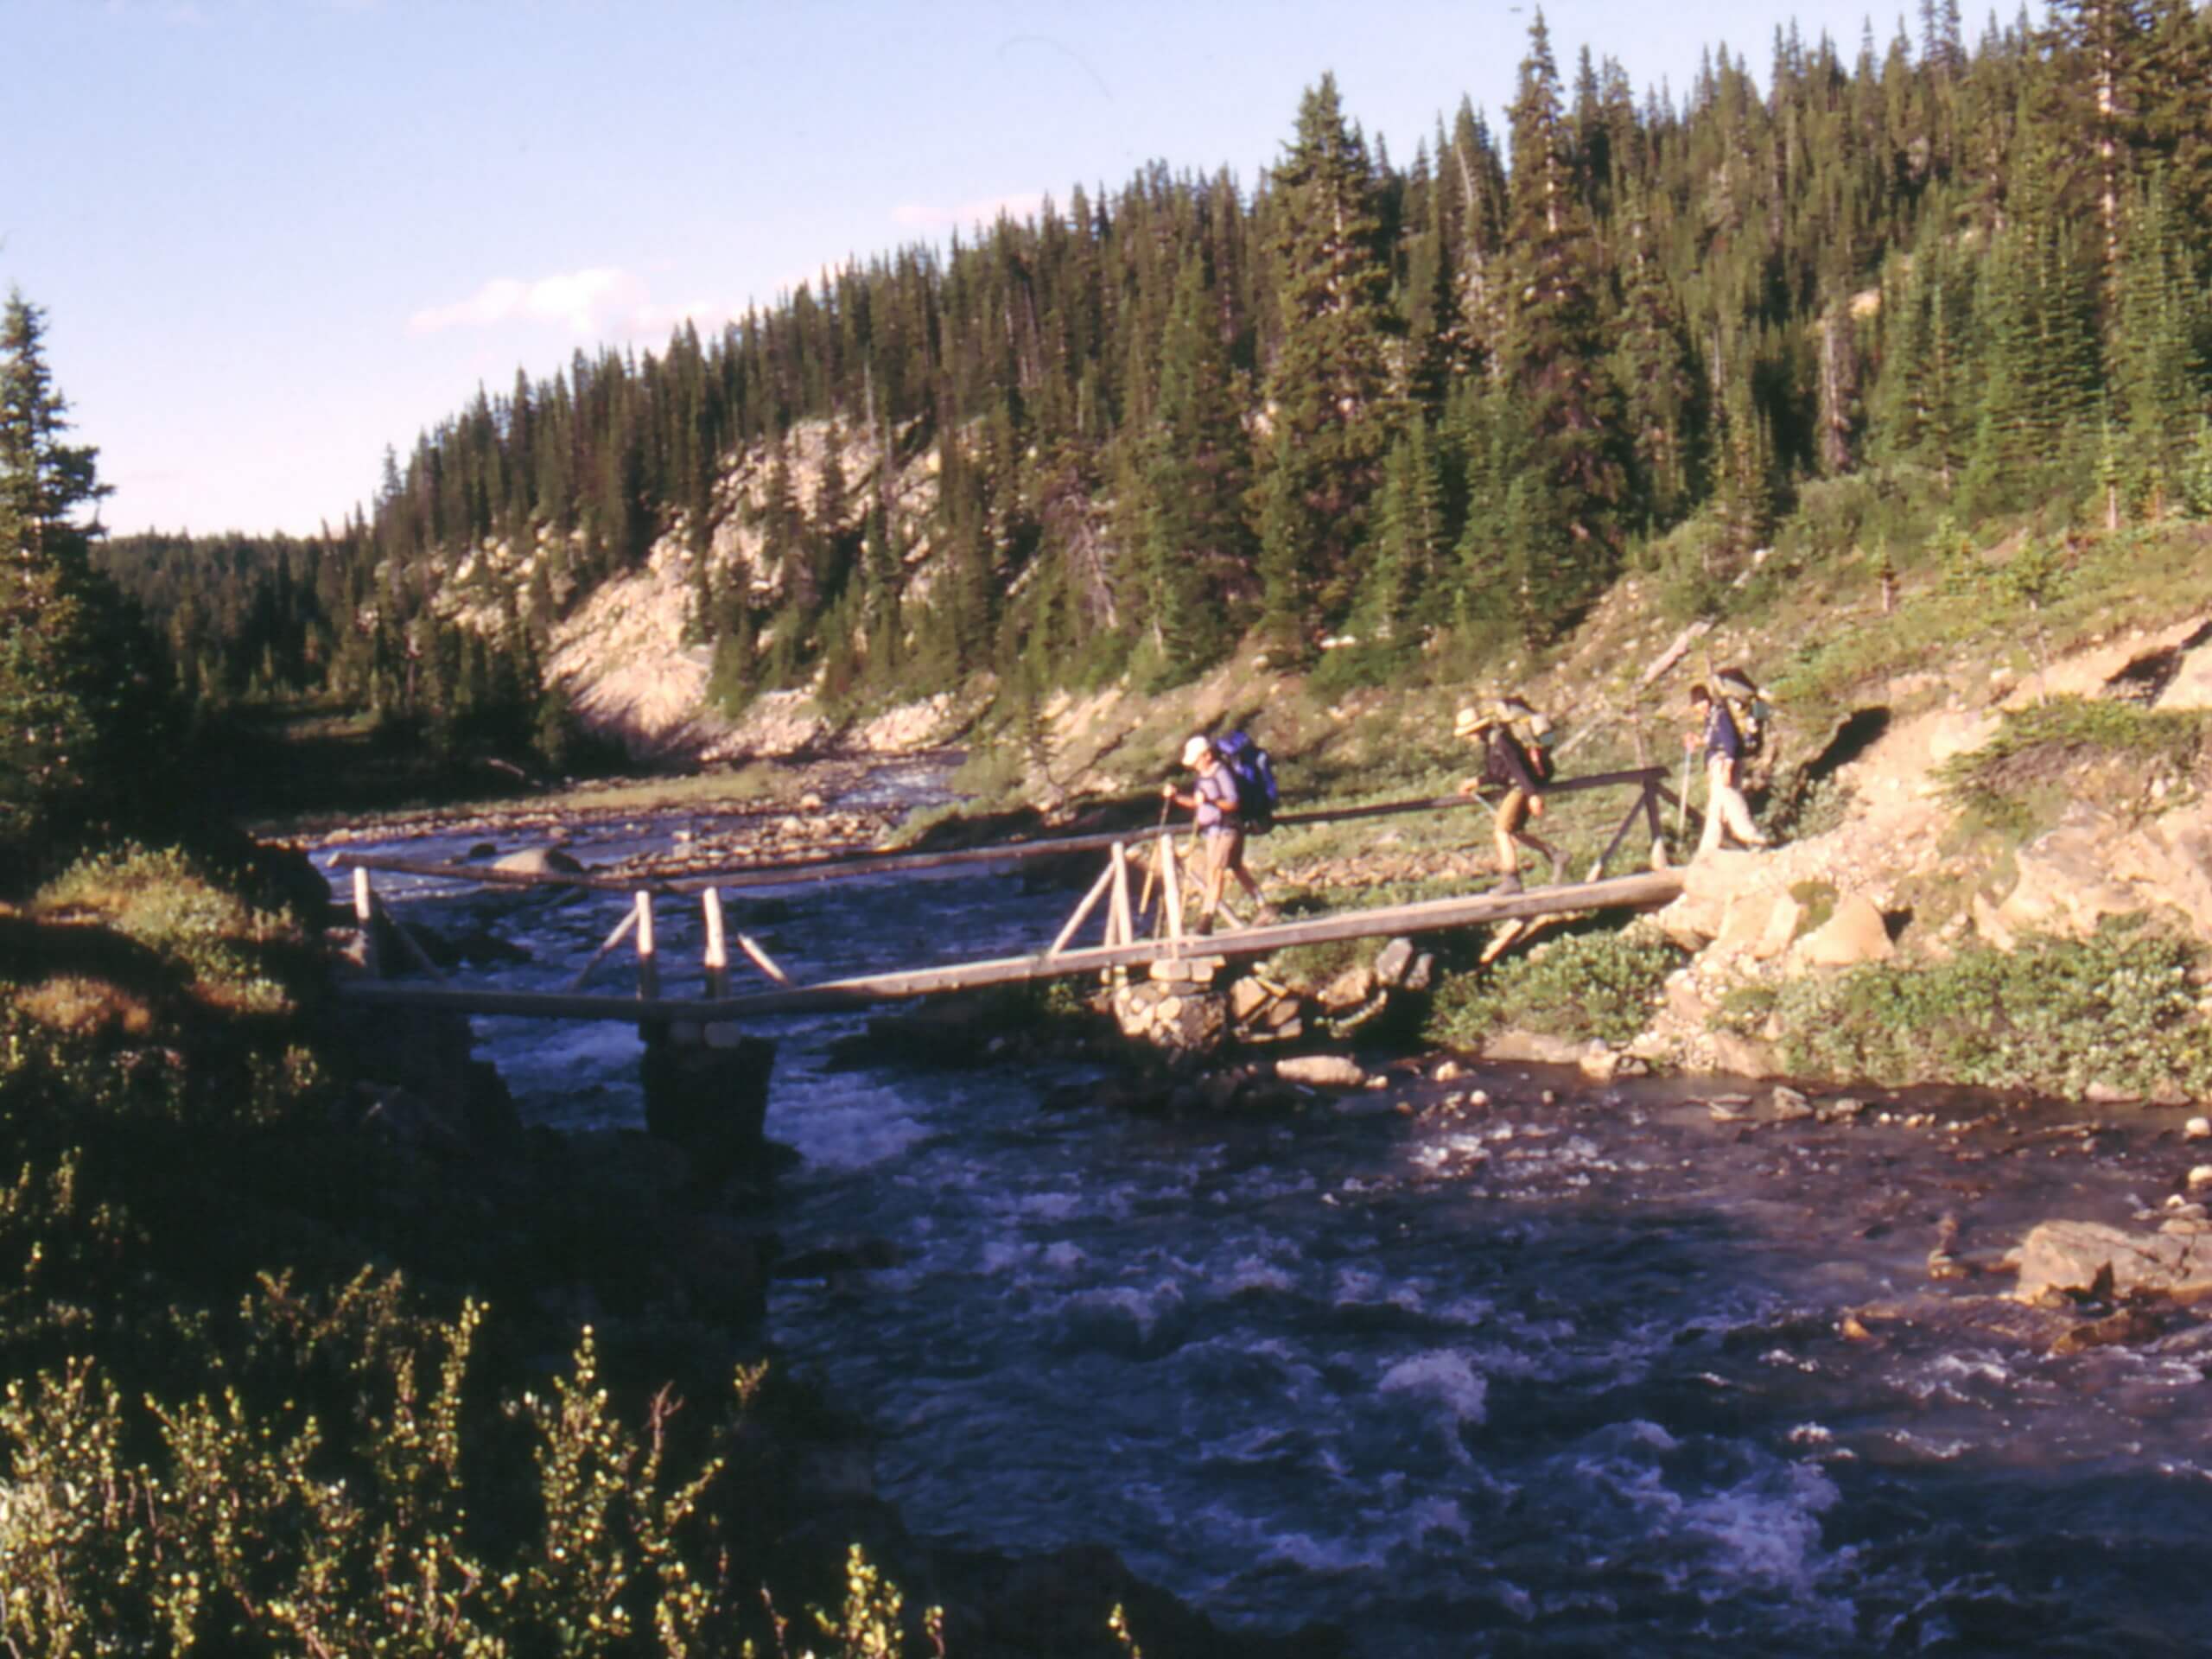 Crossing the bridge in Jasper